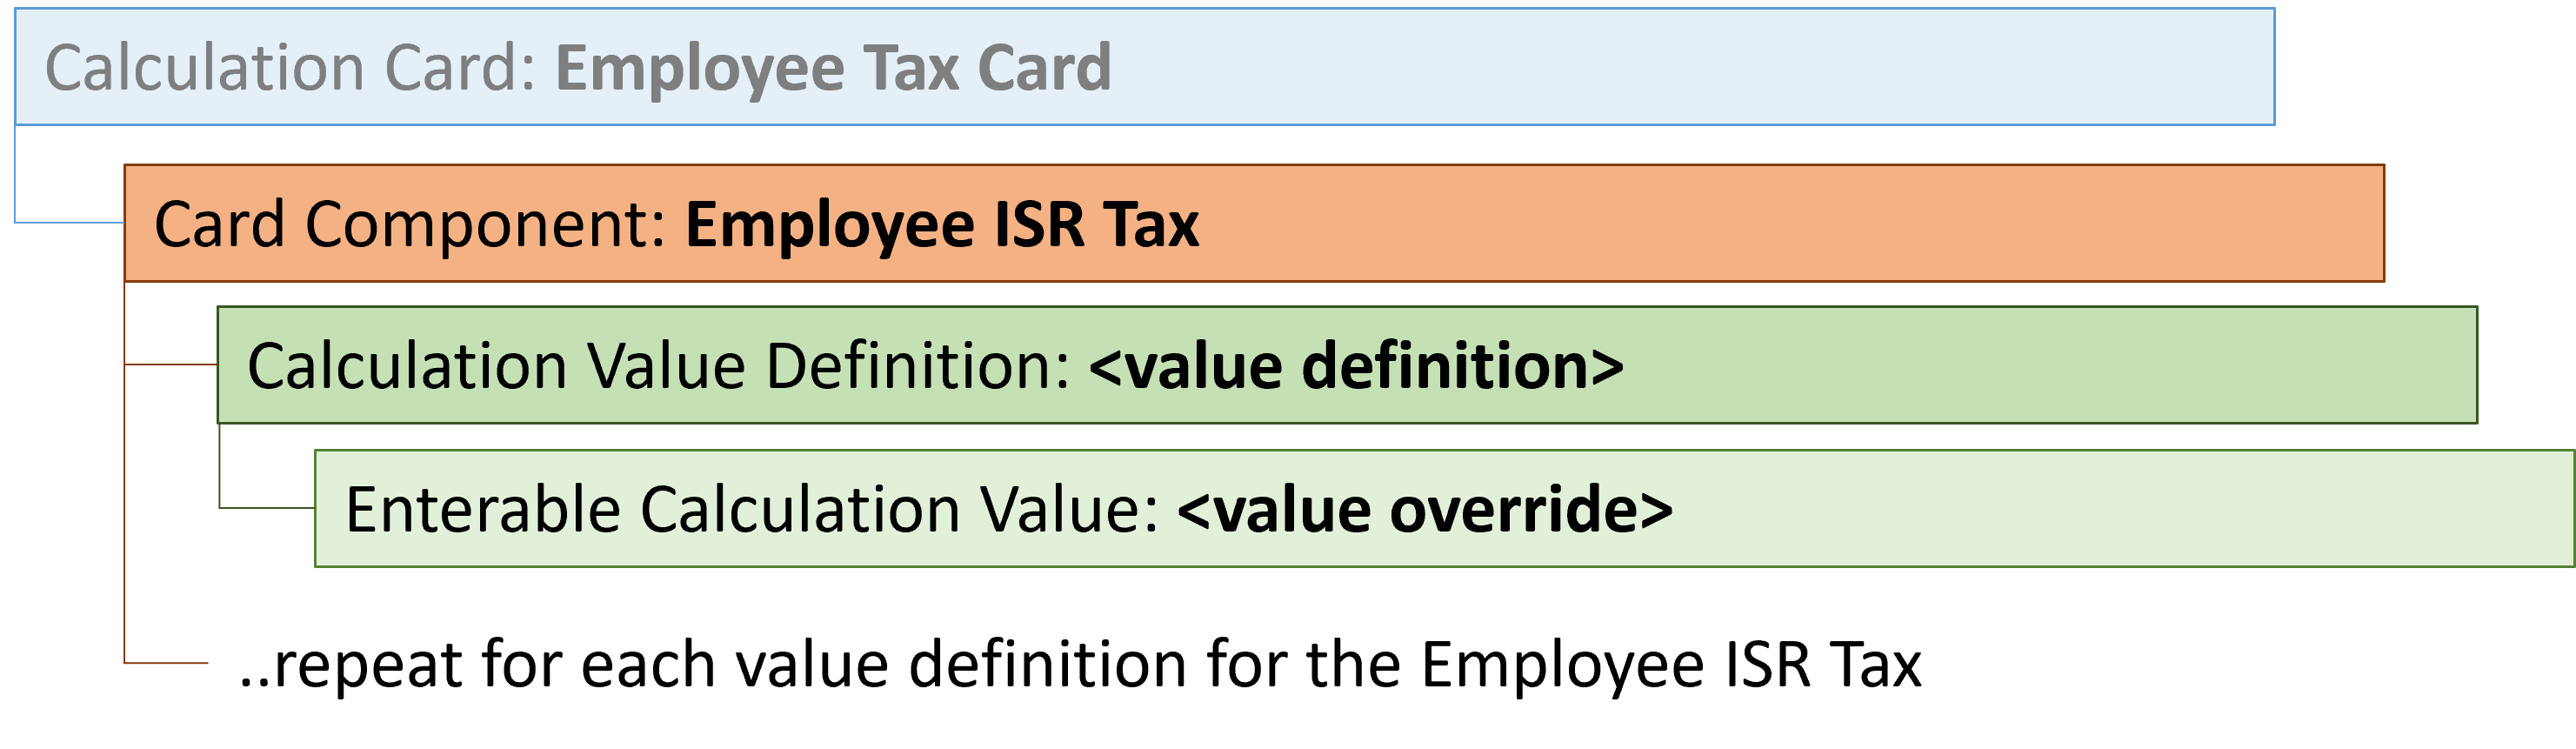 employee tax card employee isr tax card component